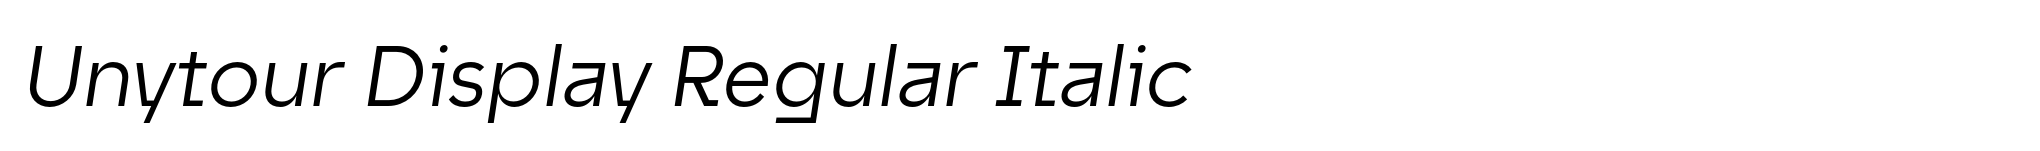 Unytour Display Regular Italic image